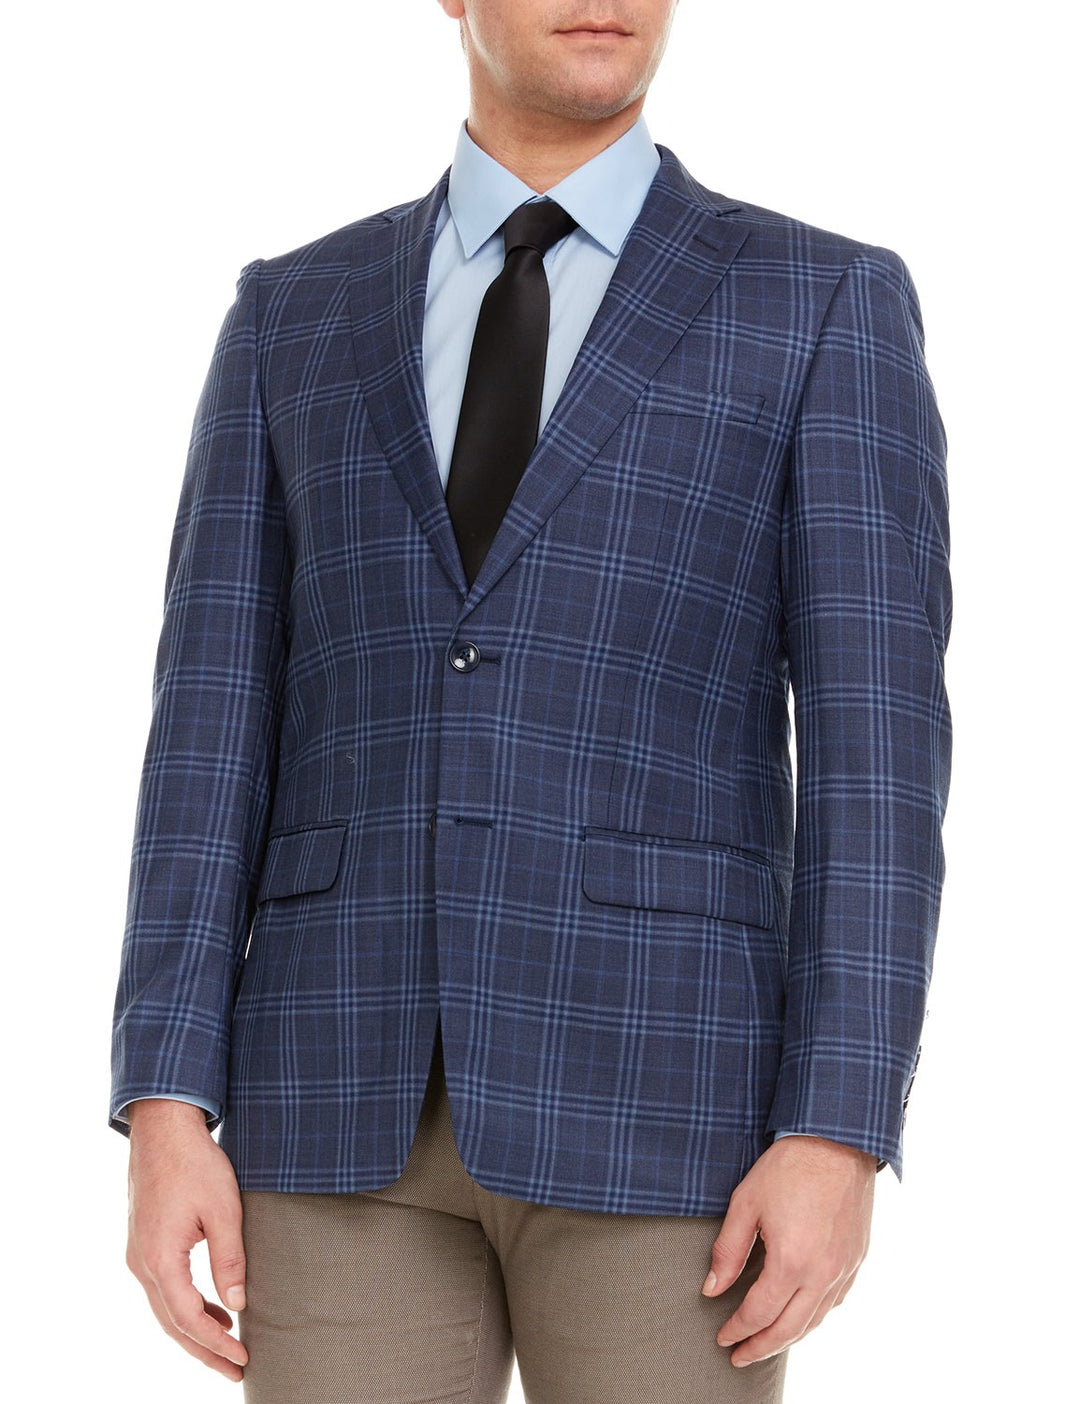 Adam Baker Men's Single Breasted 100% Wool Ultra Slim Fit Blazer/Sport Coat - Navy Blue Plaid